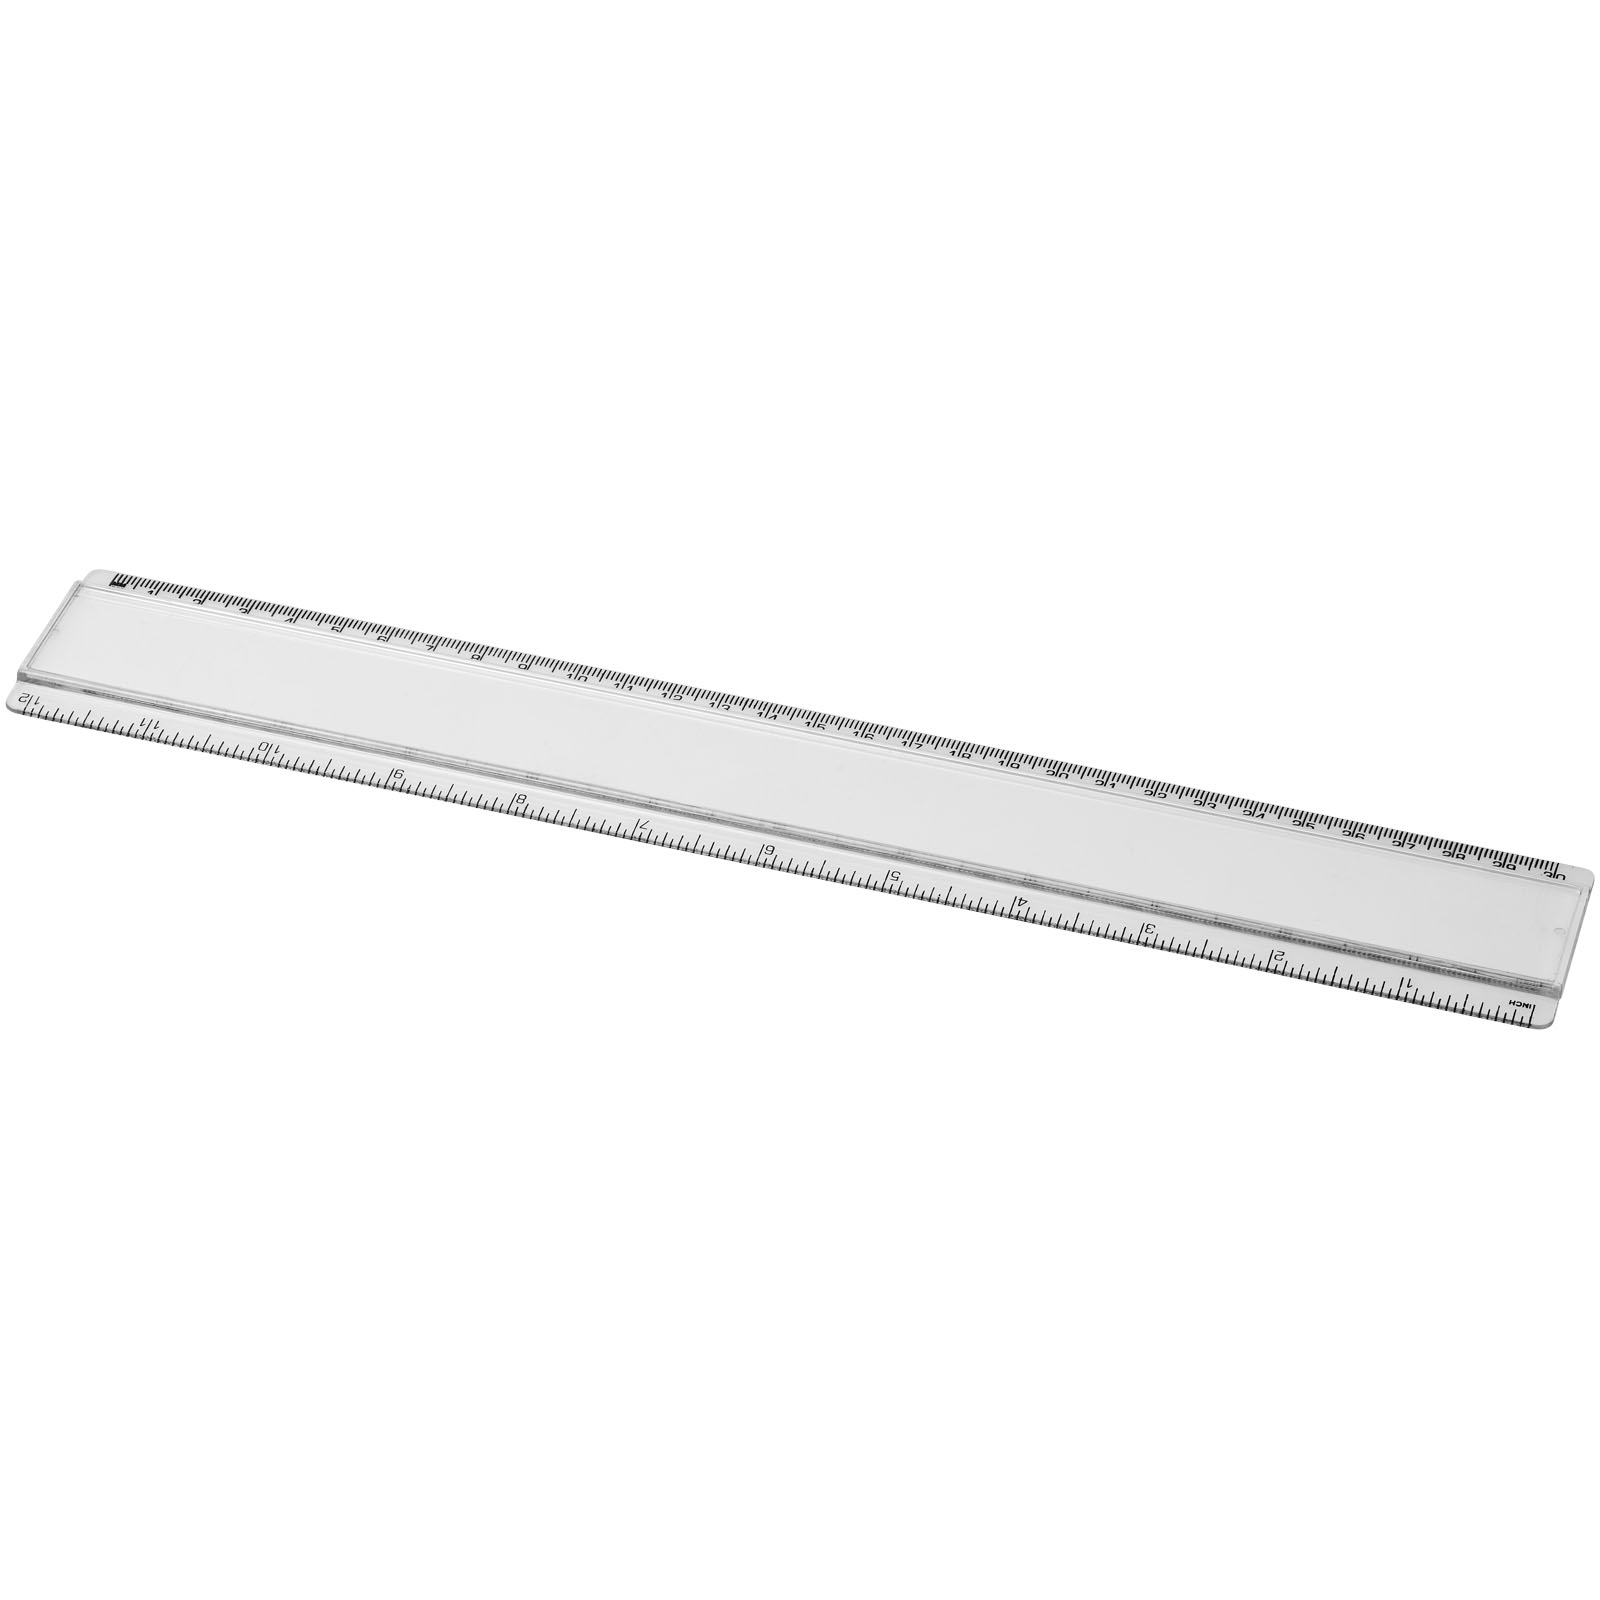 Advertising Desk Accessories - Ellison 30 cm plastic insert ruler - 0